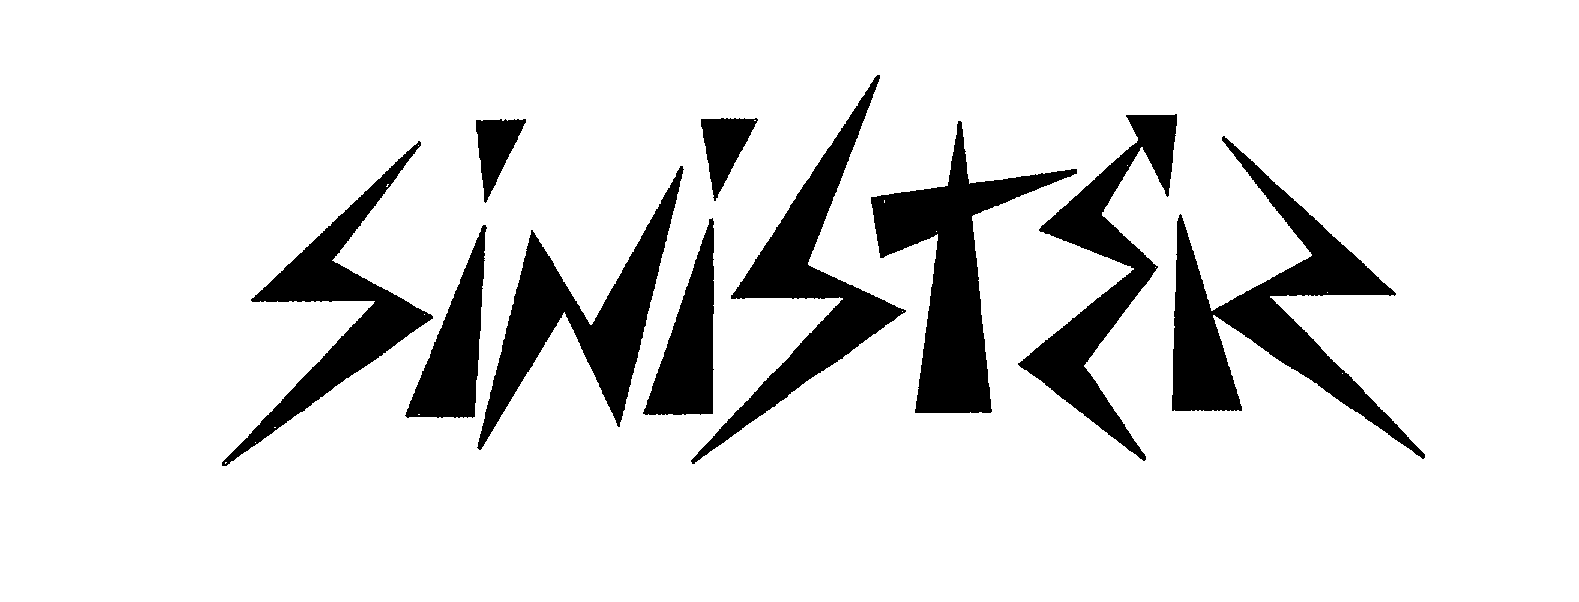 Trademark Logo SINISTER